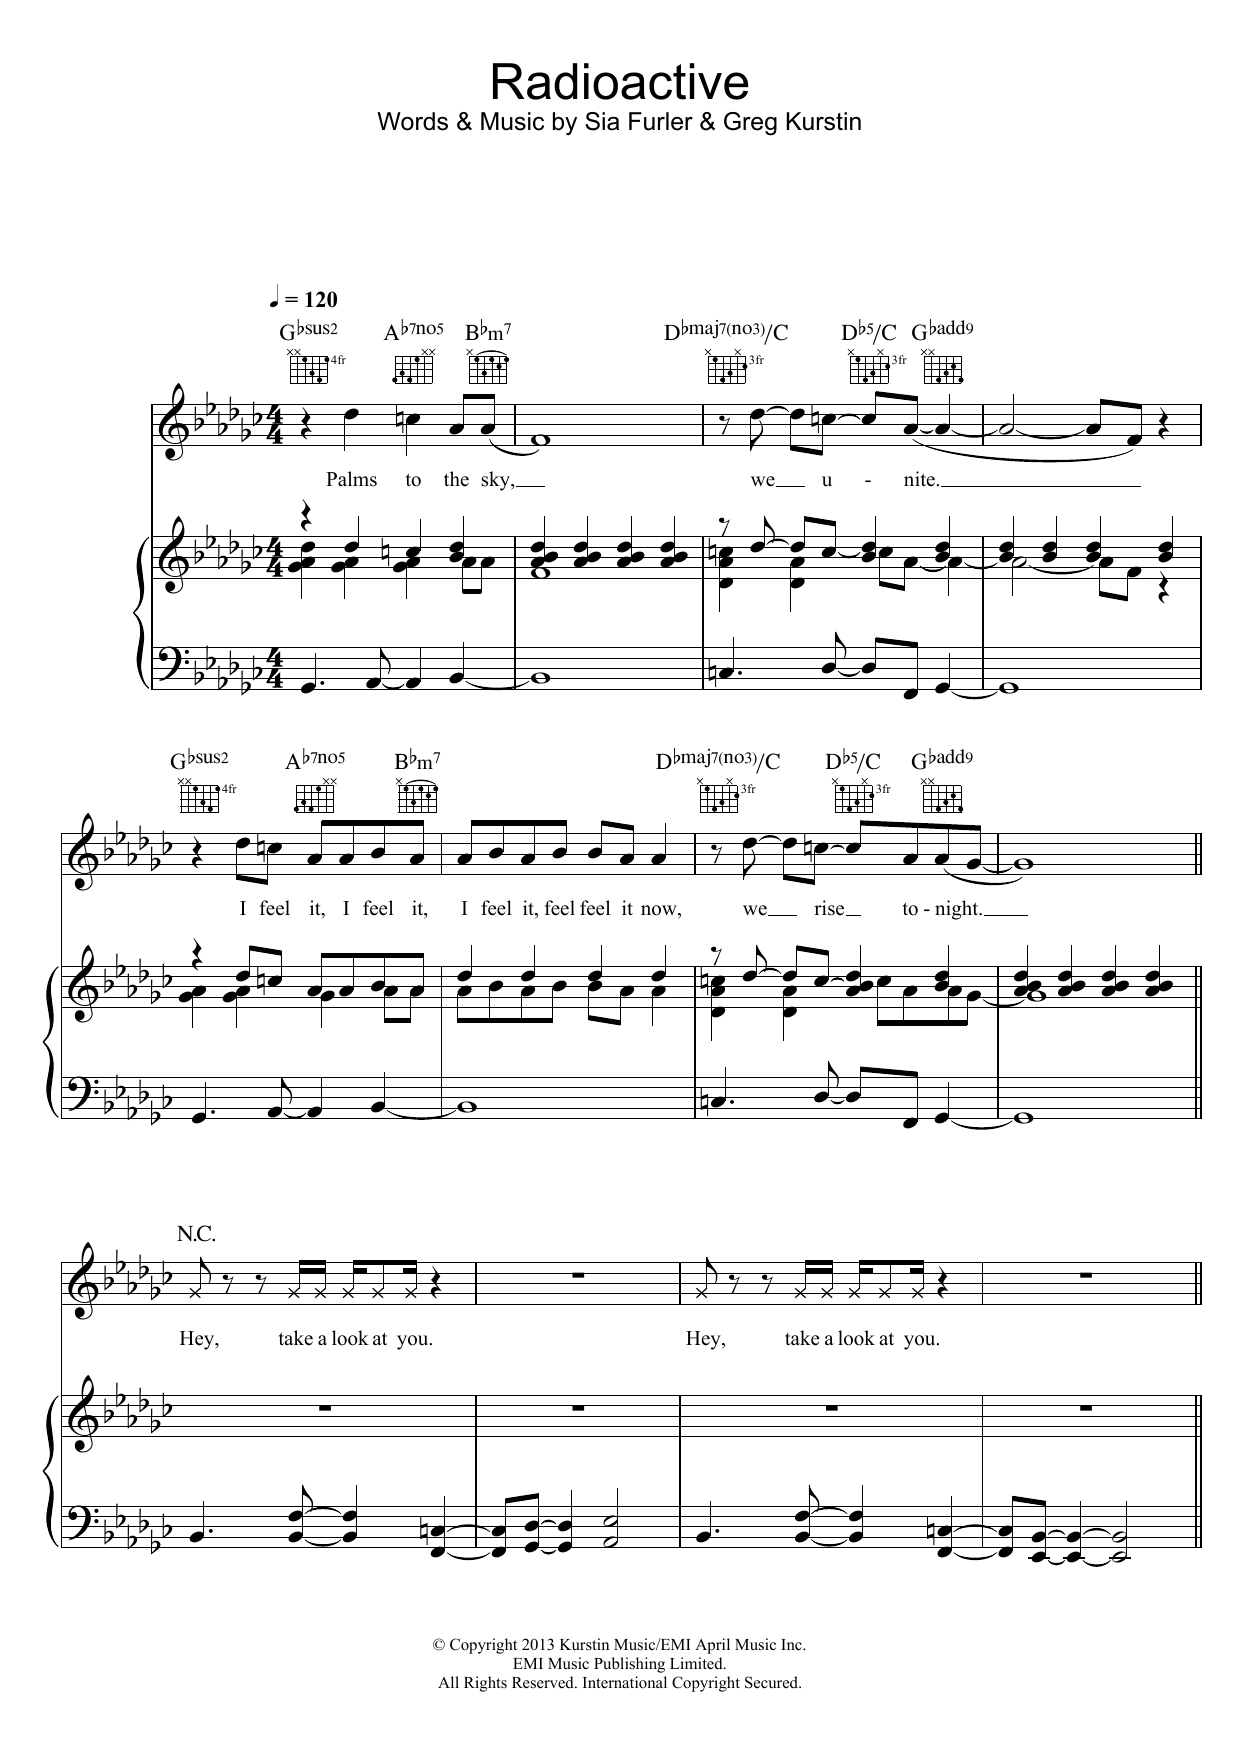 Rita Ora Radioactive Sheet Music Notes & Chords for Piano, Vocal & Guitar (Right-Hand Melody) - Download or Print PDF